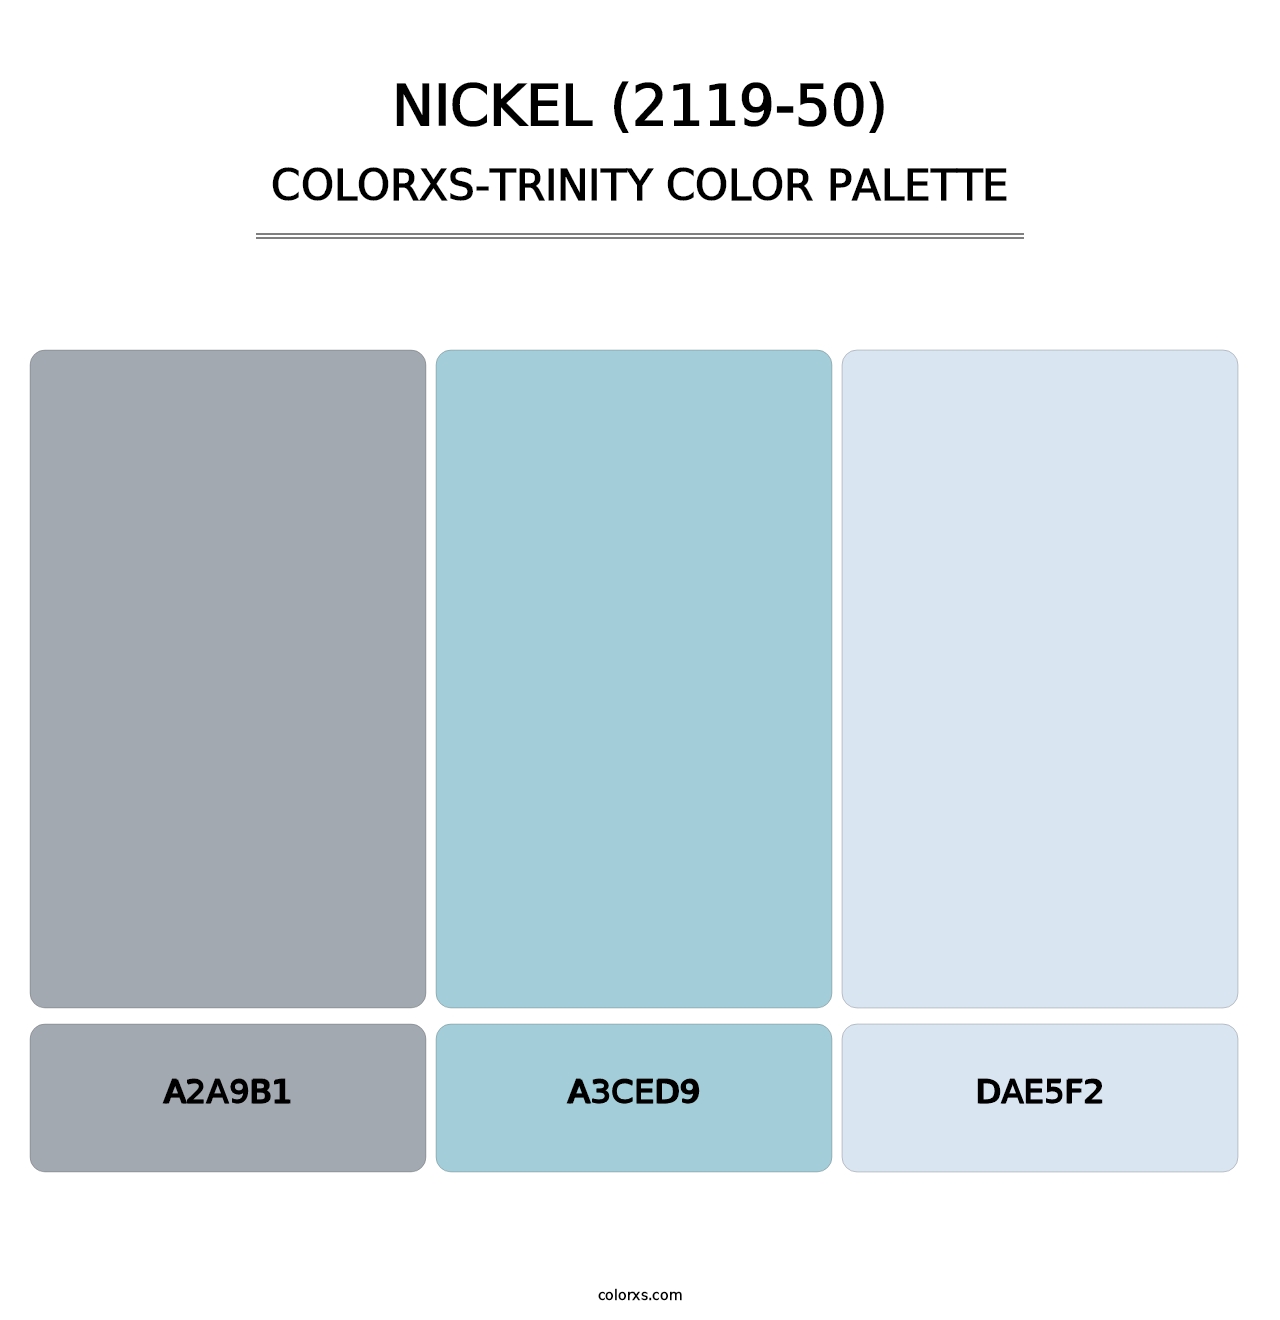 Nickel (2119-50) - Colorxs Trinity Palette